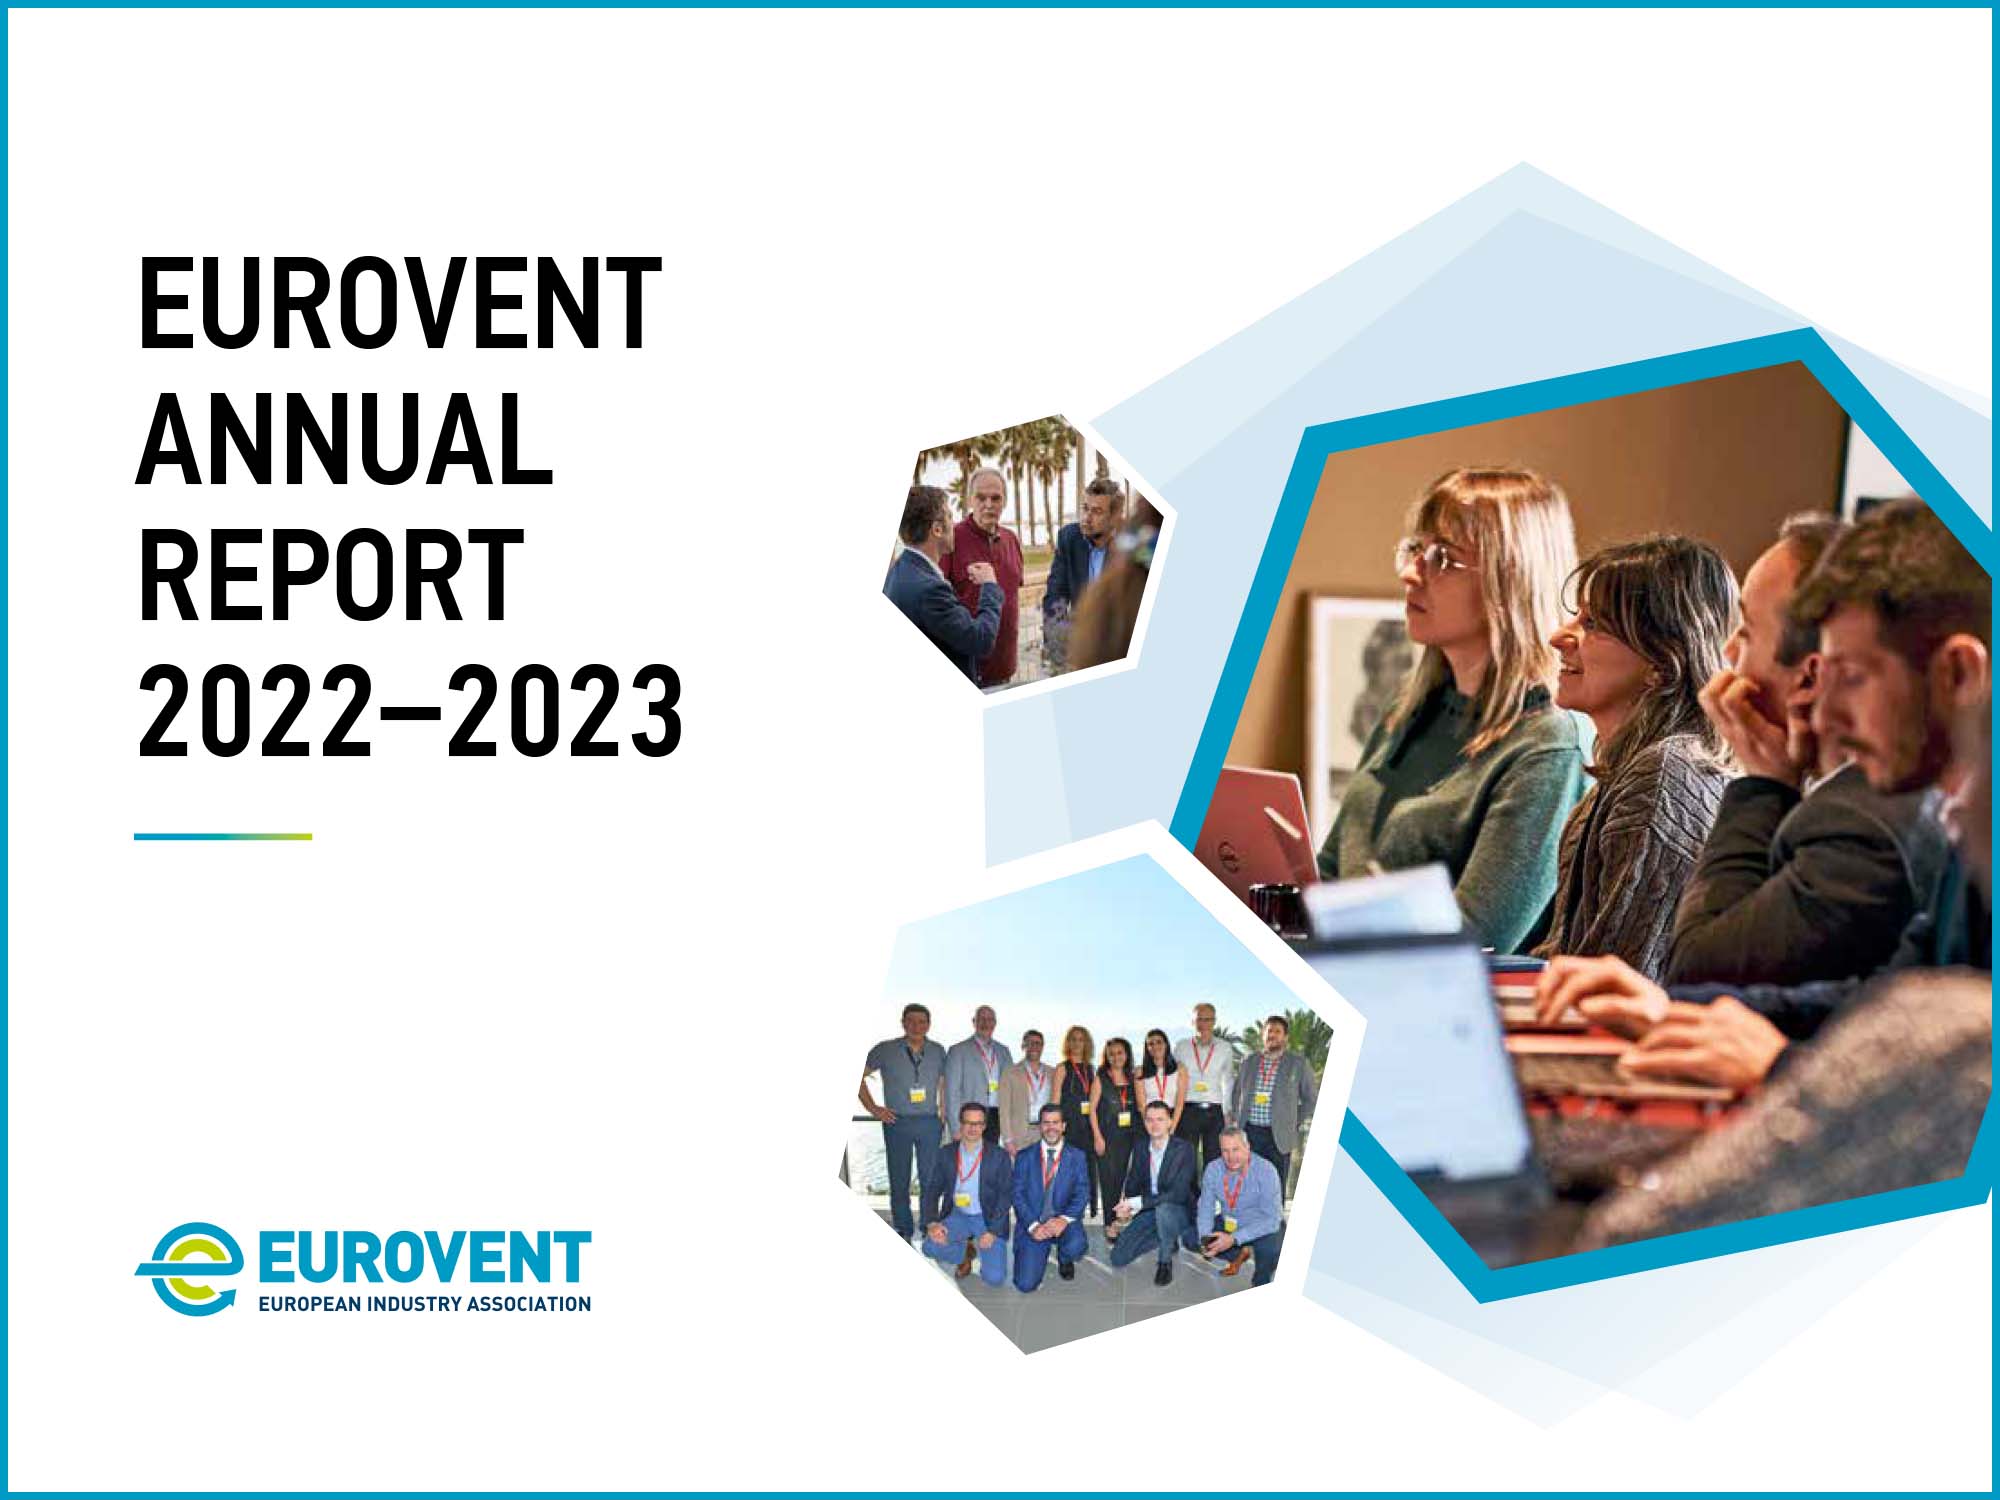 Eurovent Annual Report 2022-2023